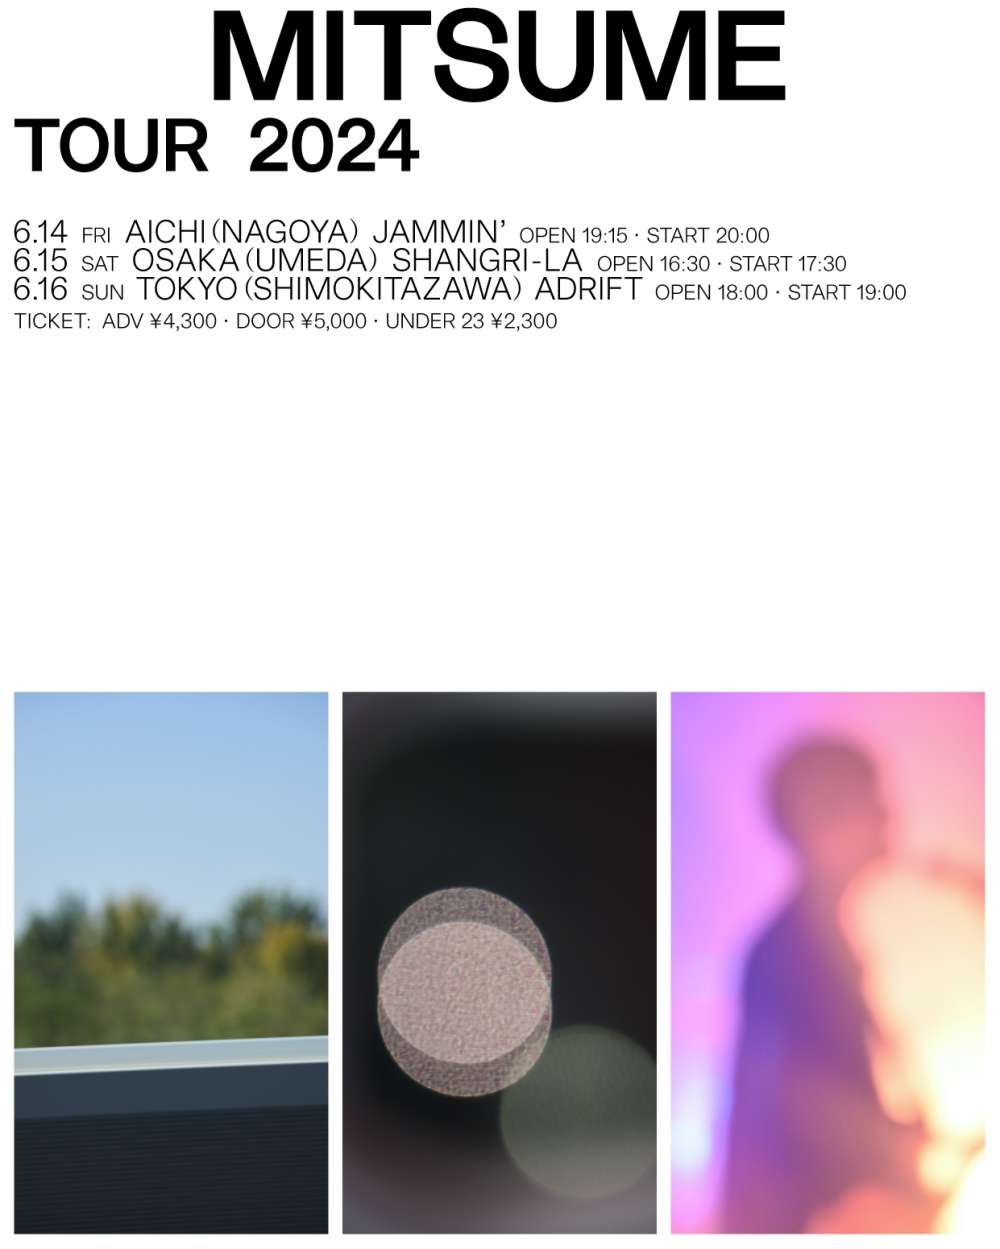 『mitsume TOUR 2024』を開催します。